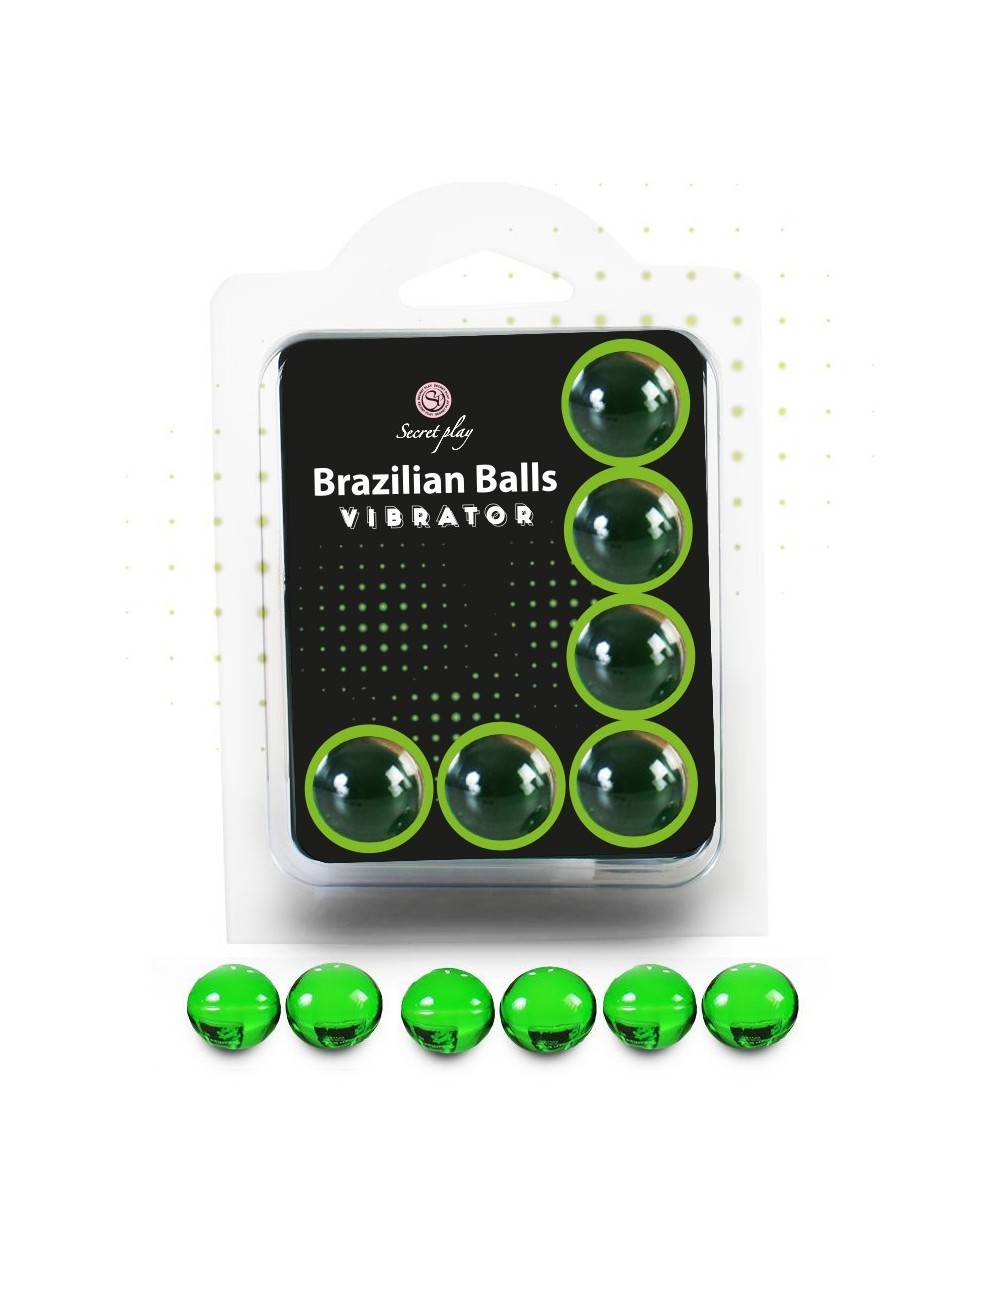 6 Brazilian Balls 3591-1 Vibrator - BZ-03754 - Huiles de massage -